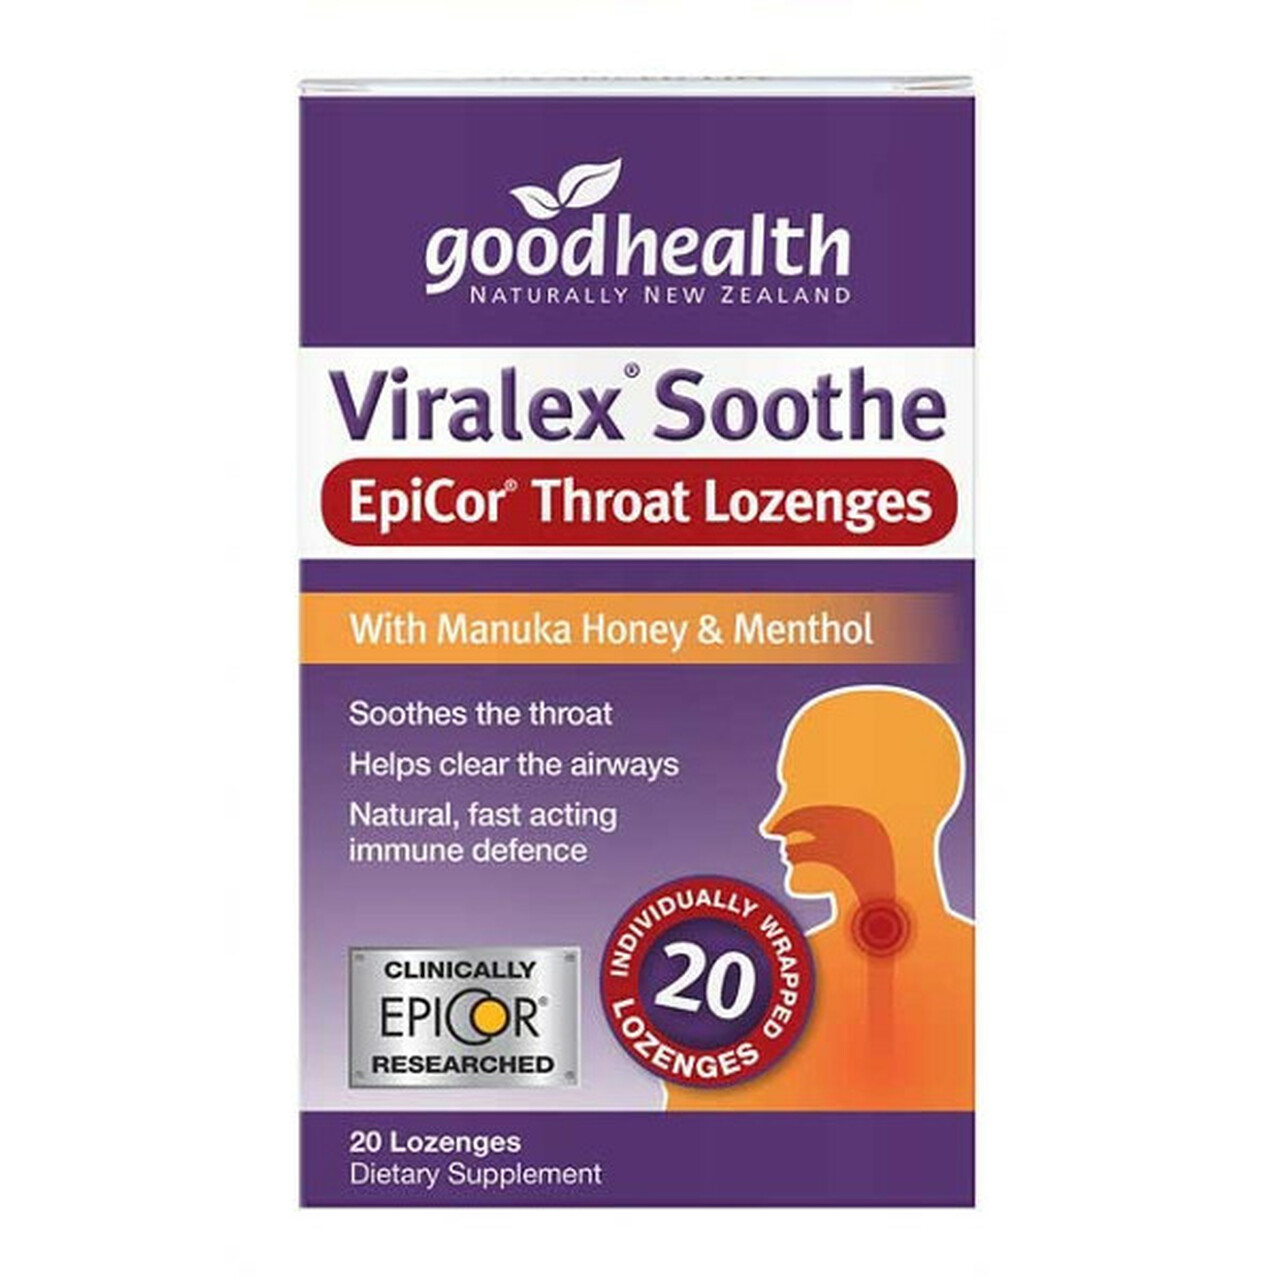 Good Health Viralex Soothe Epicor Lozenges 20 Pack